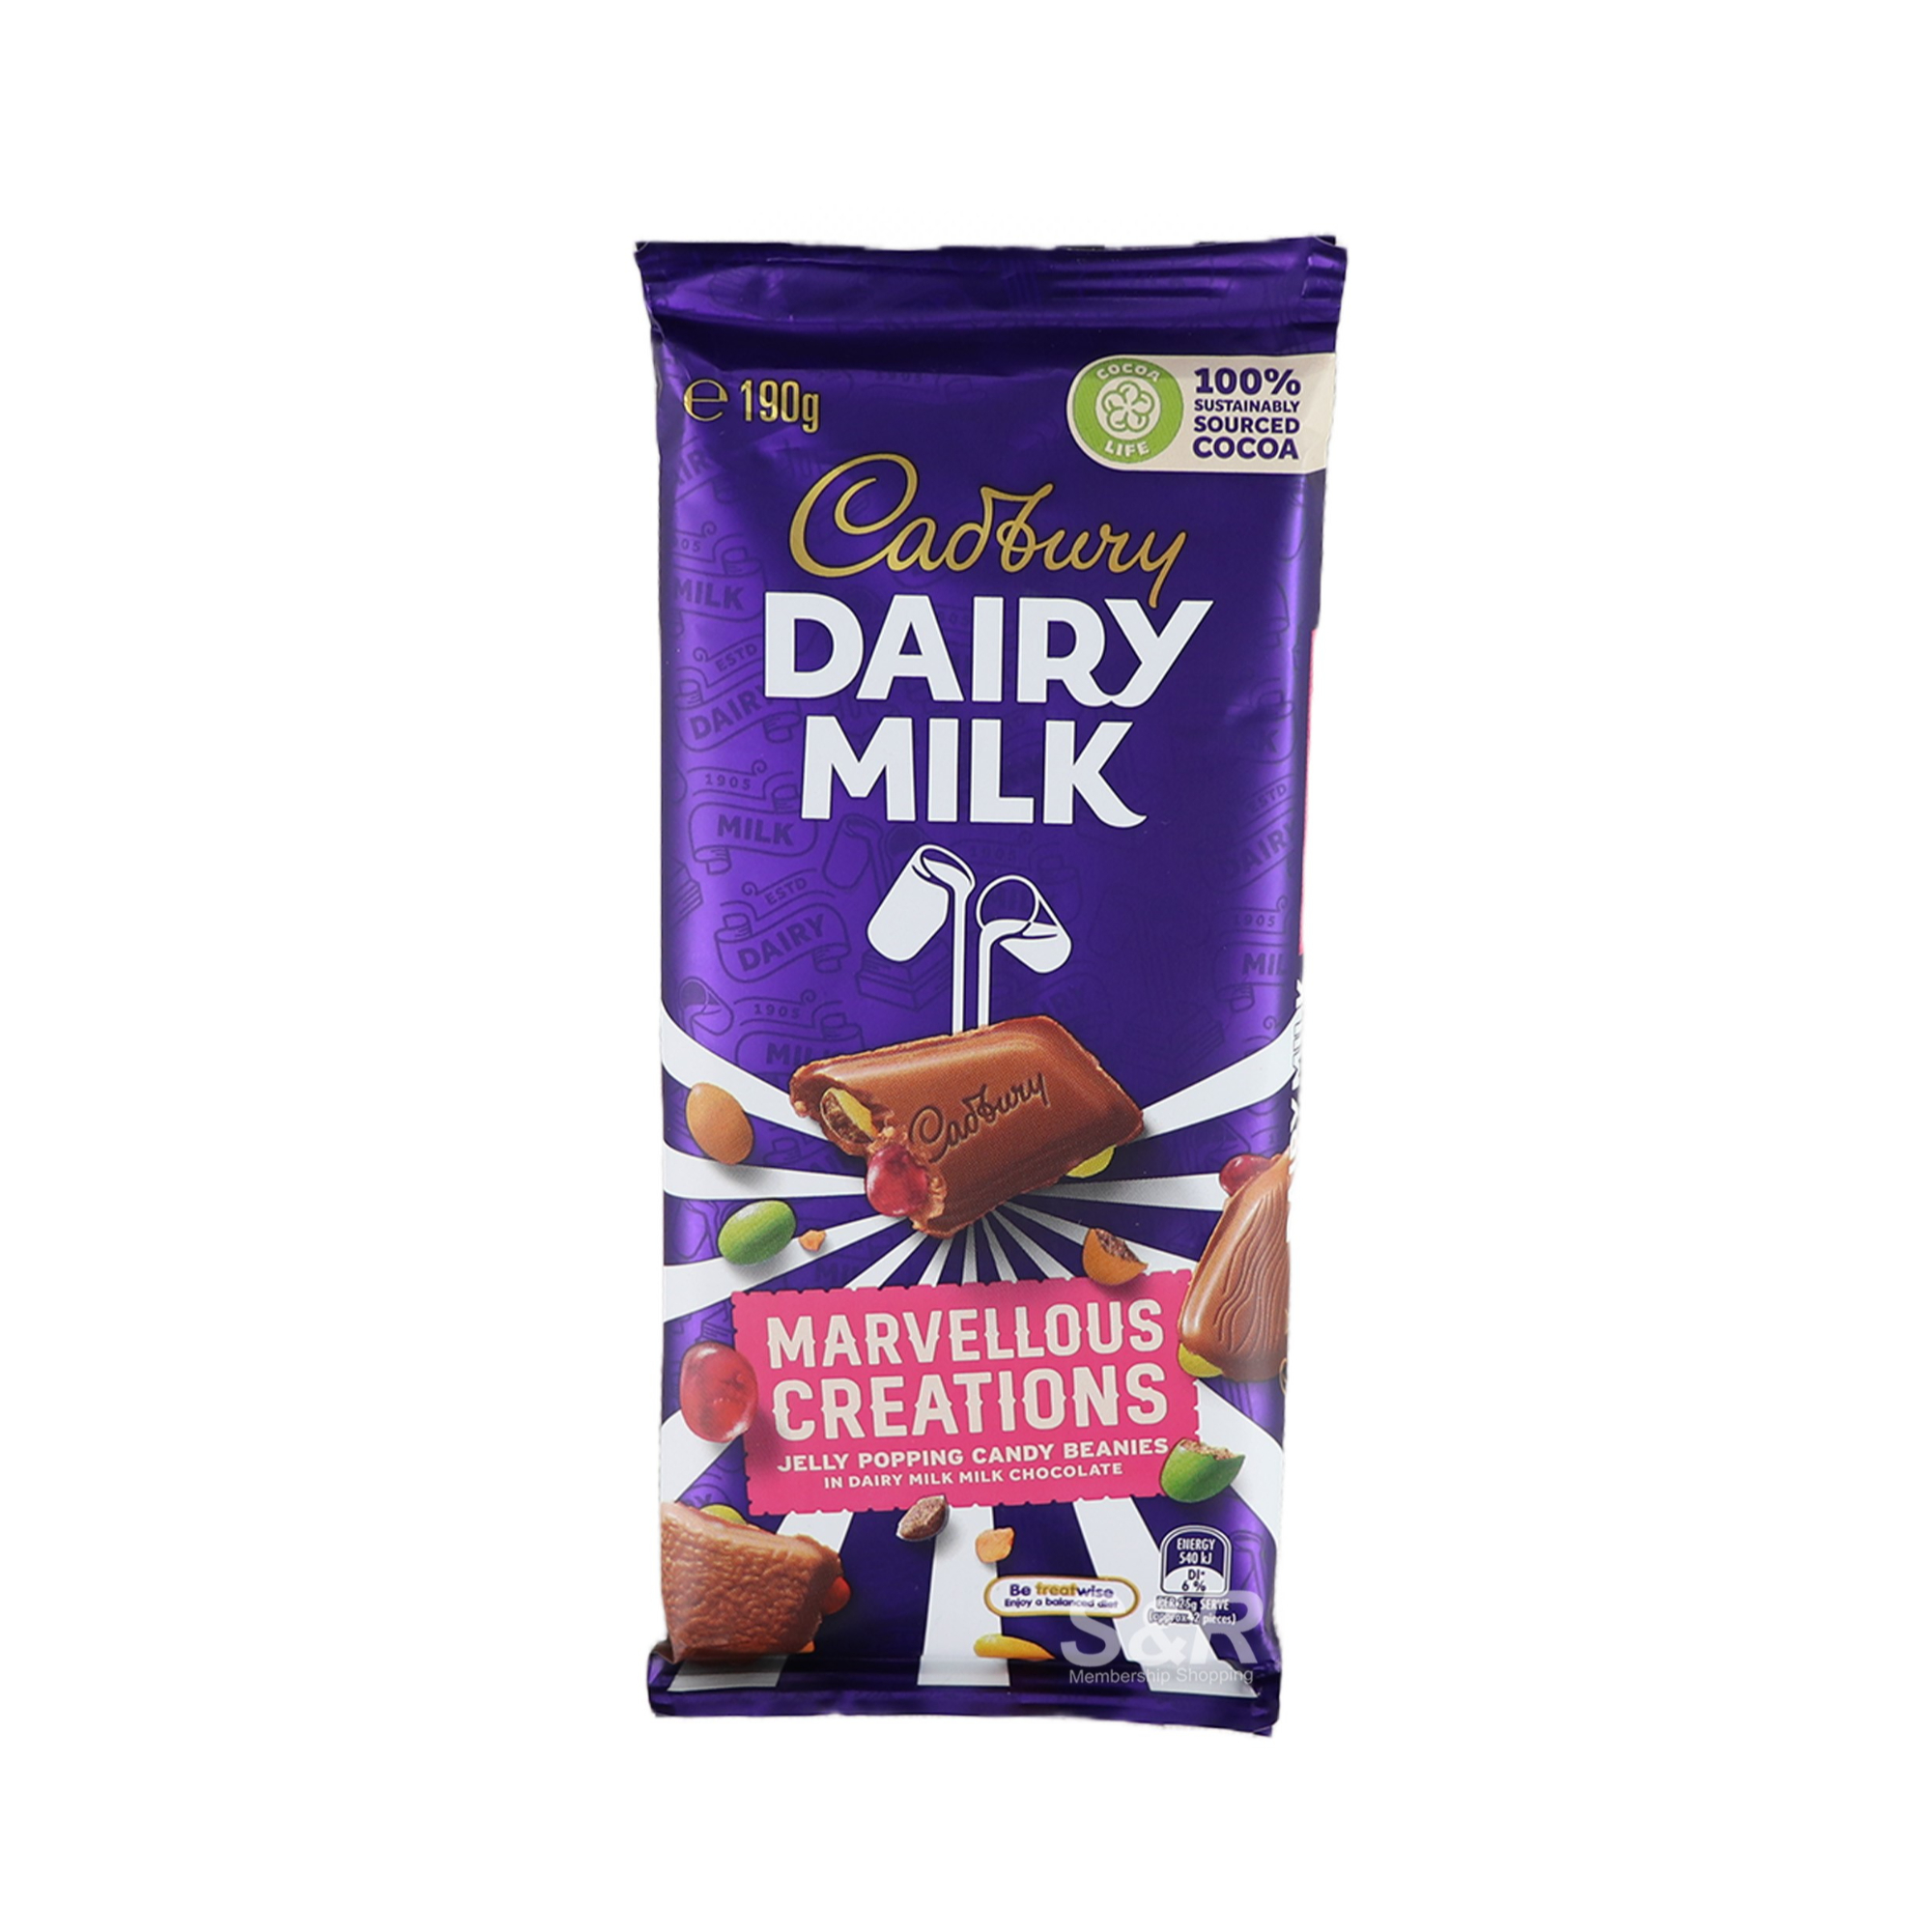 Cadbury Dairy Milk Marvellous Creations Chocolate Bar 190g